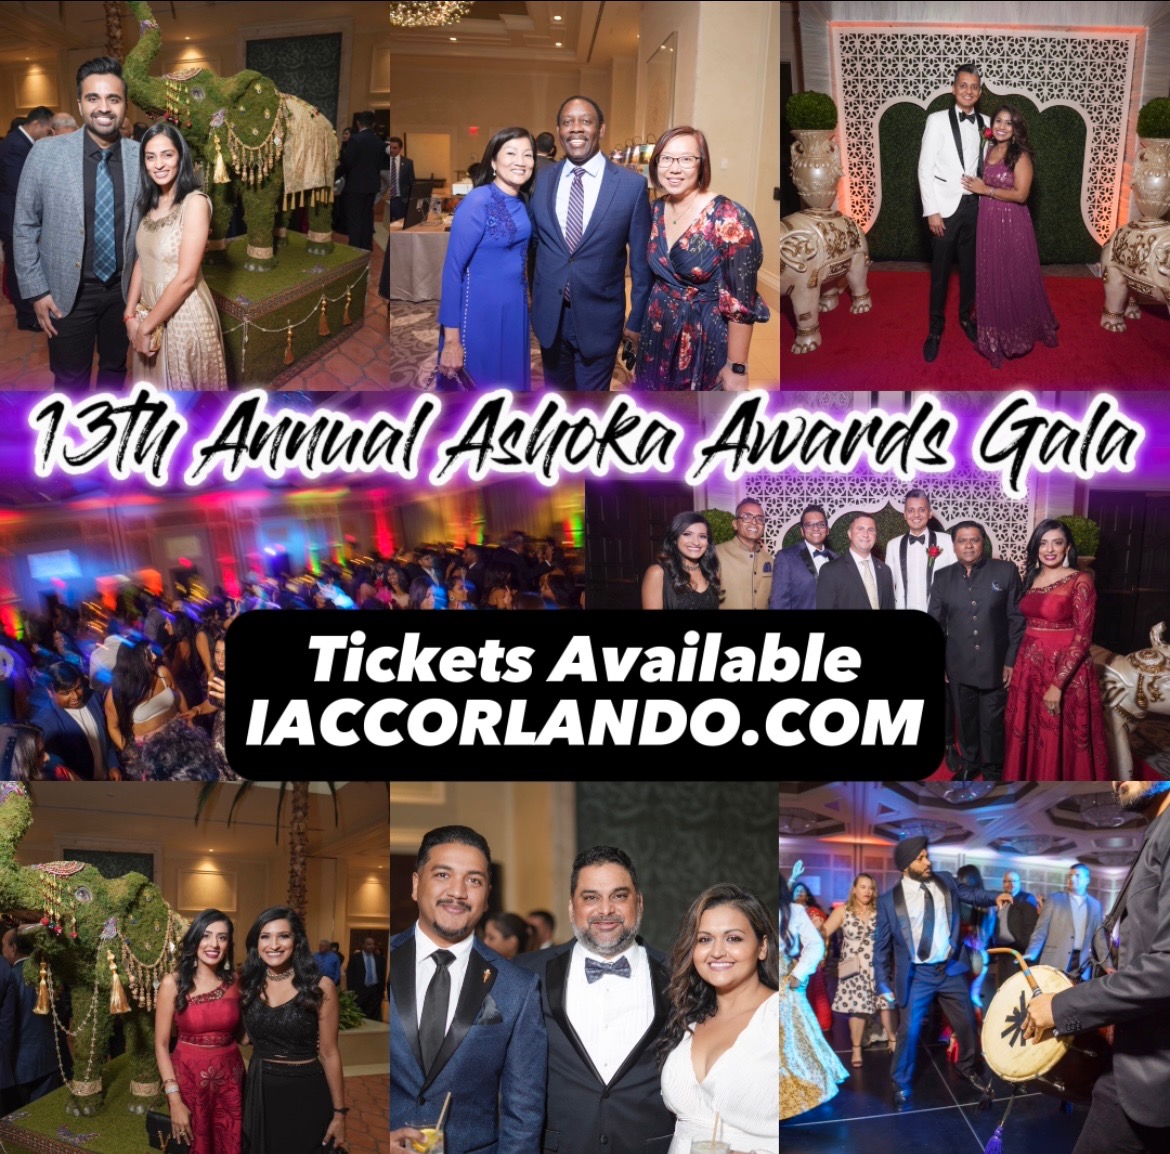 IACC 13th Annual Ashoka Awards Gala